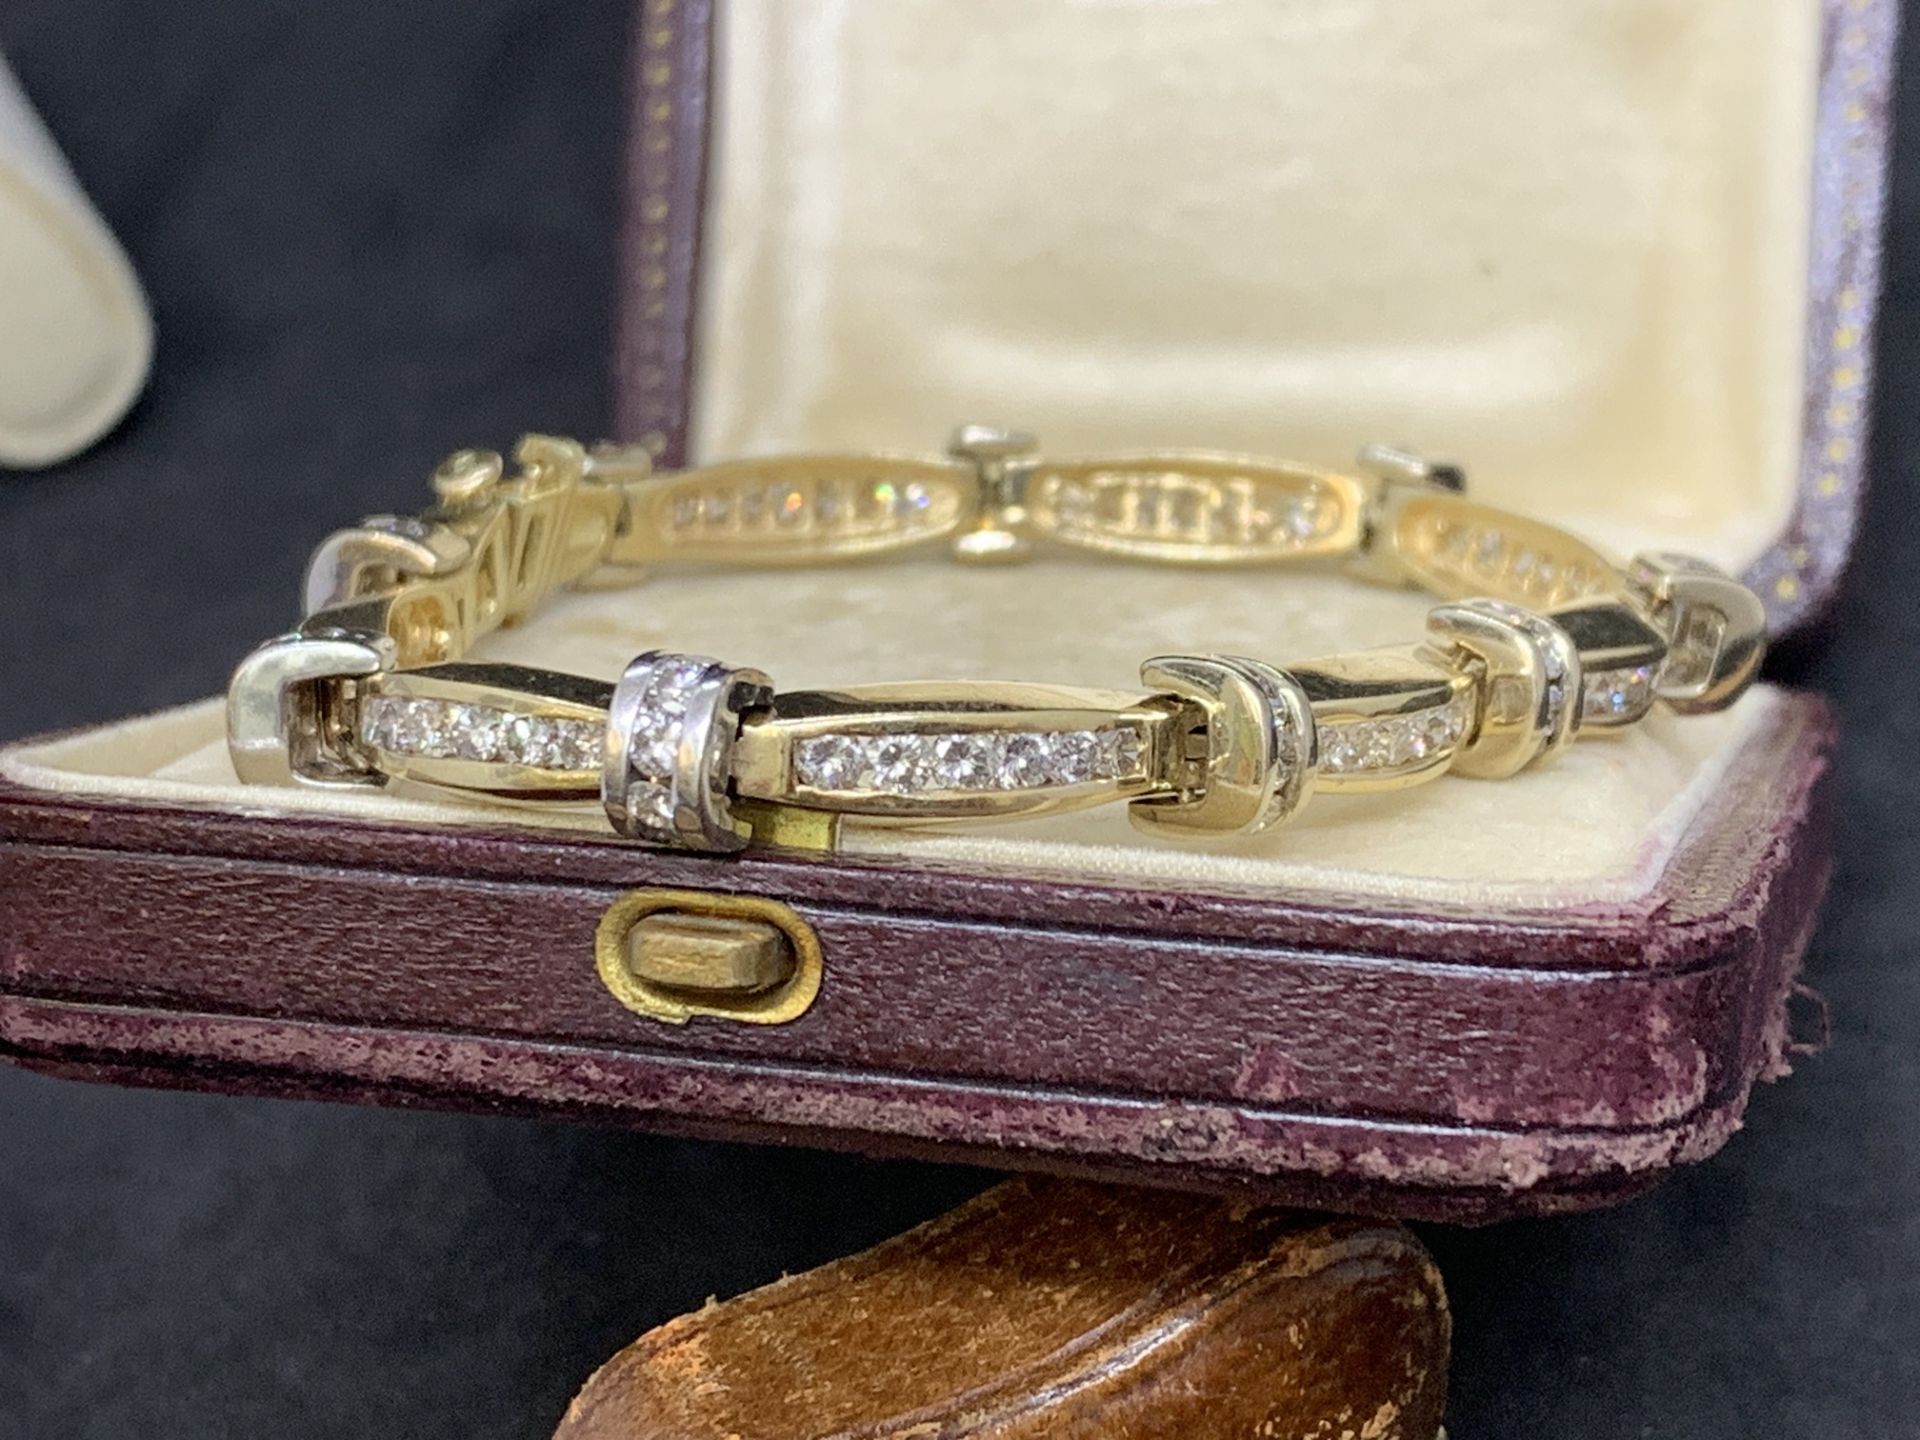 14 carat gold diamond bracelet set with approximately five carats of diamonds 25.8 g approximately - Image 2 of 7